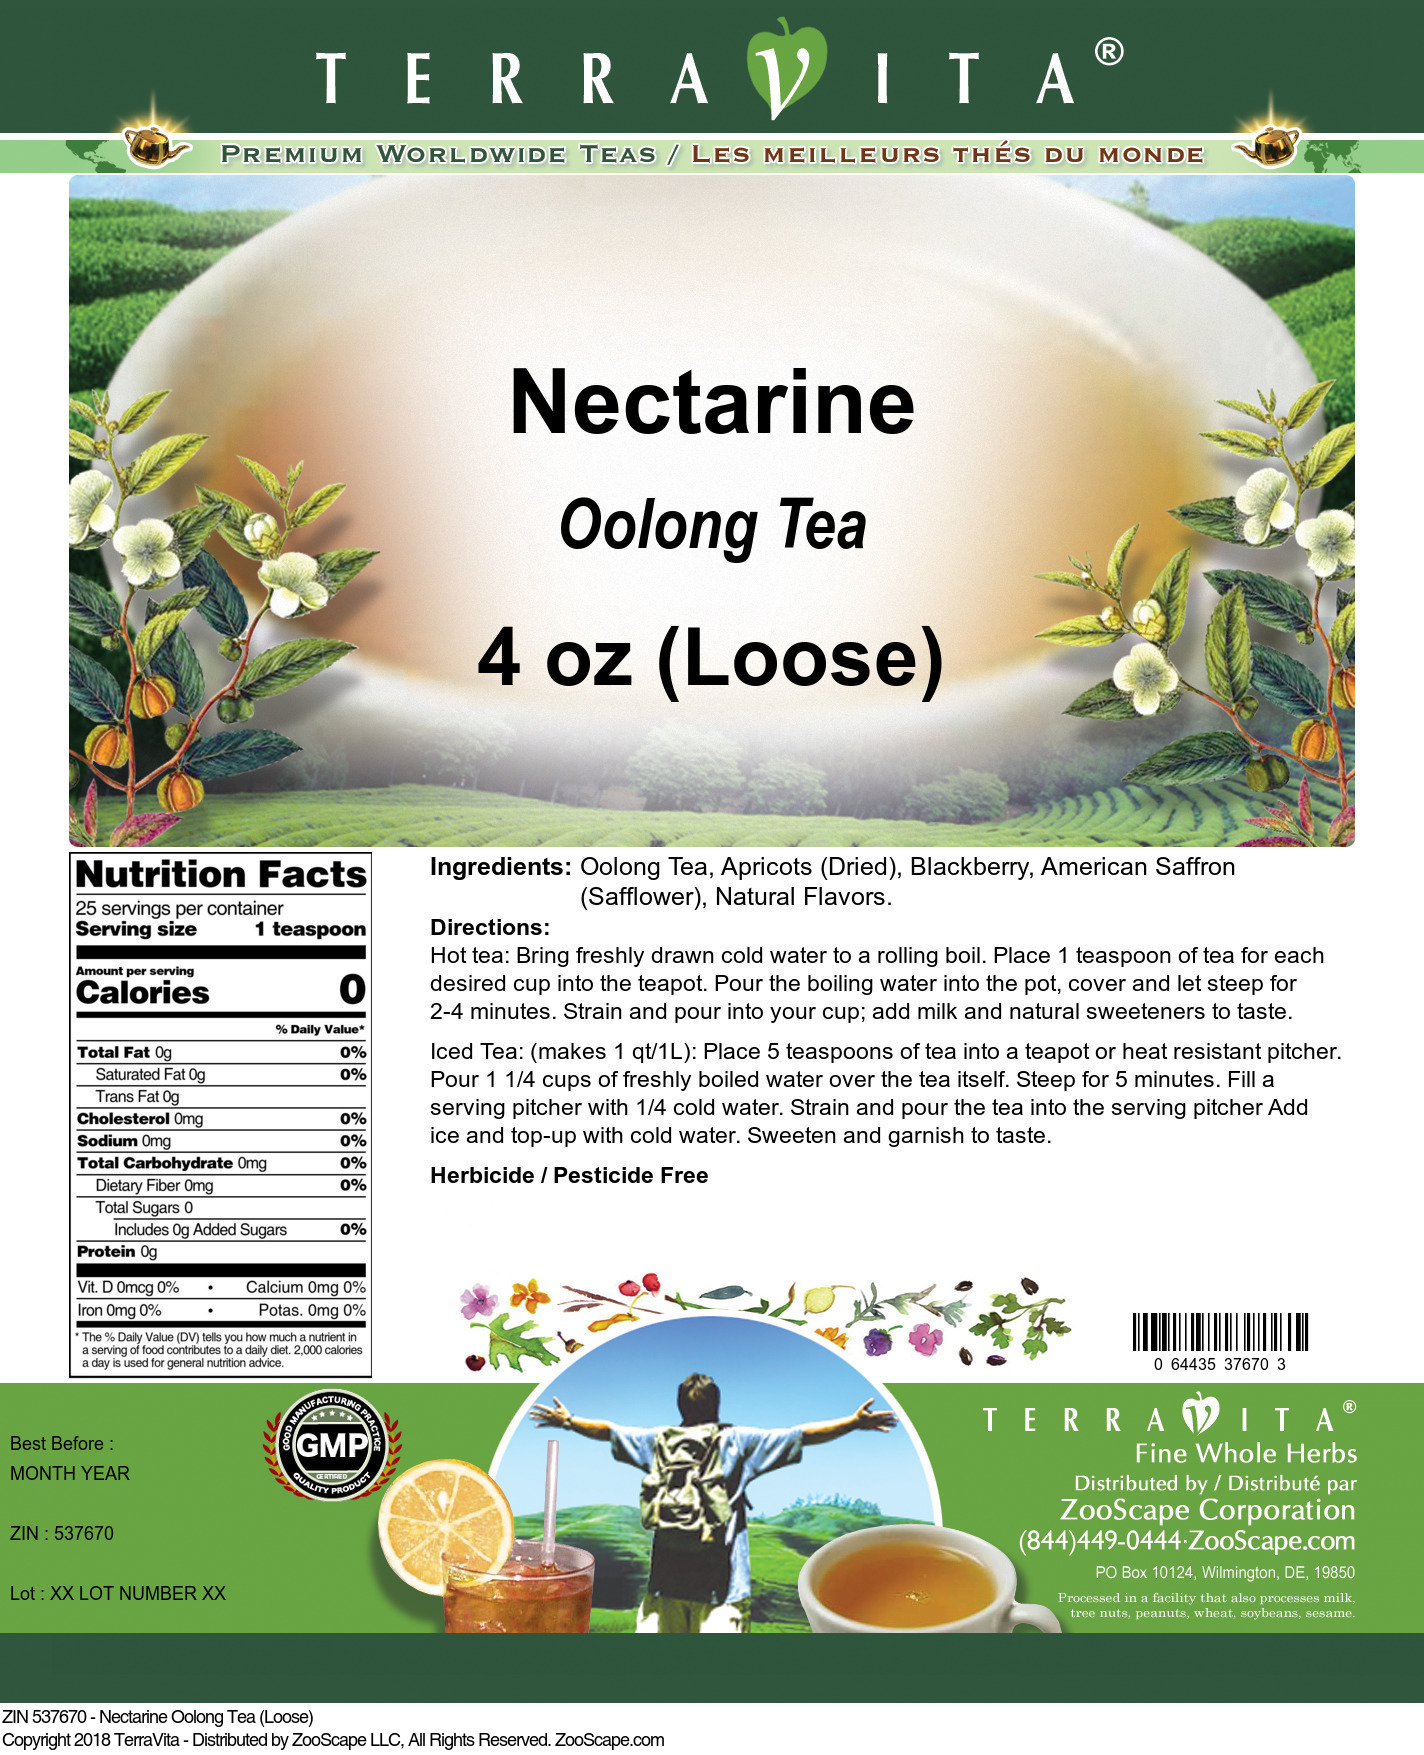 Nectarine Oolong Tea (Loose) - Label